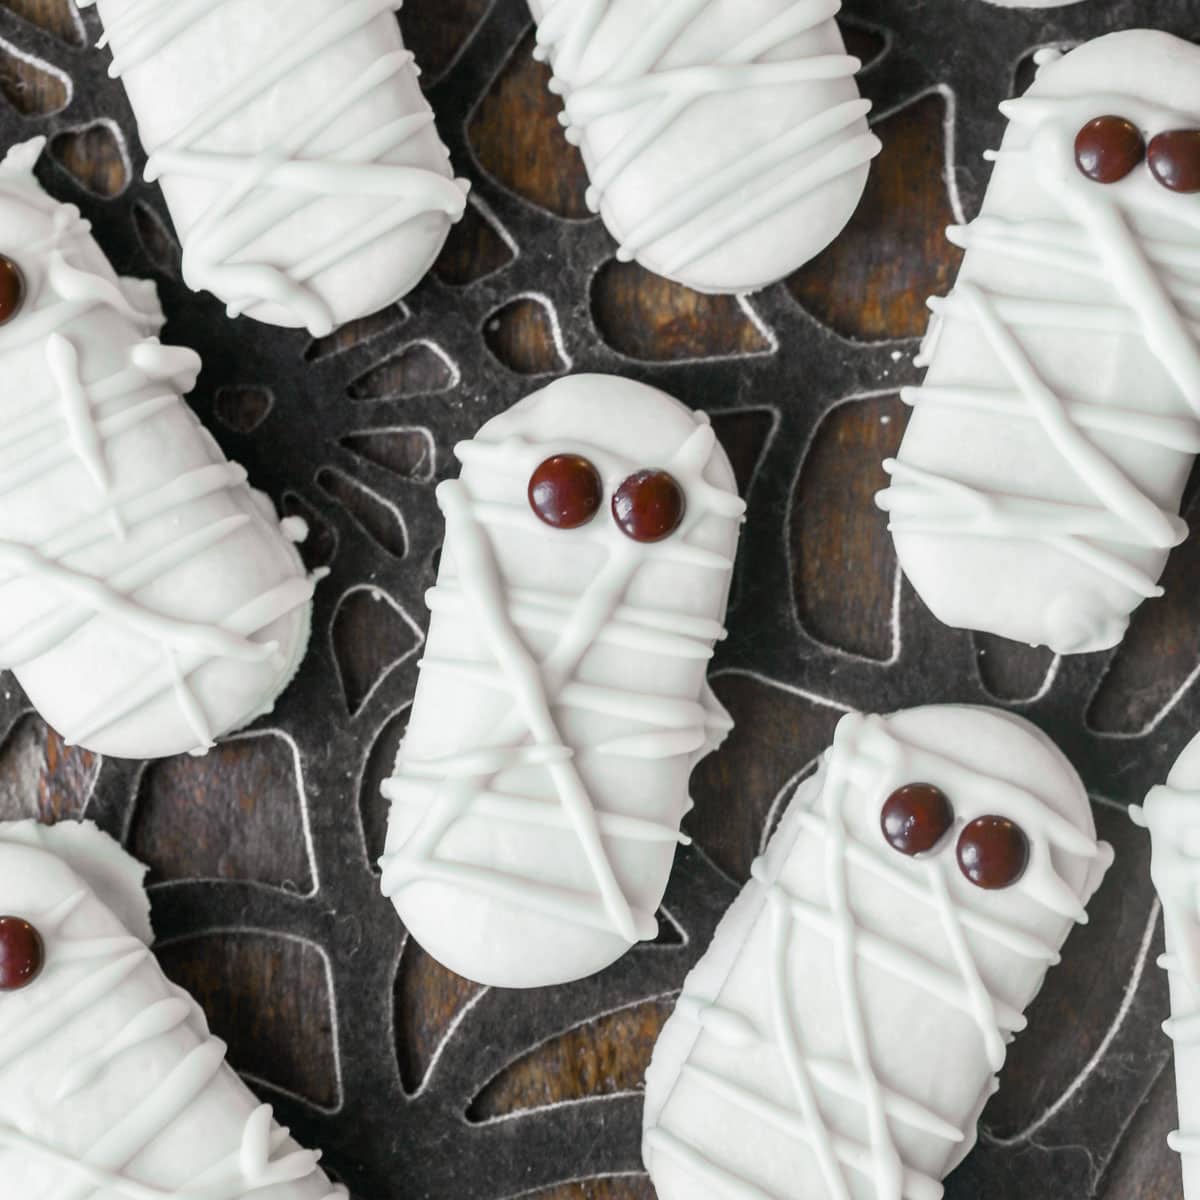 Halloween desserts - mummy cookies displayed on a spider web mat.